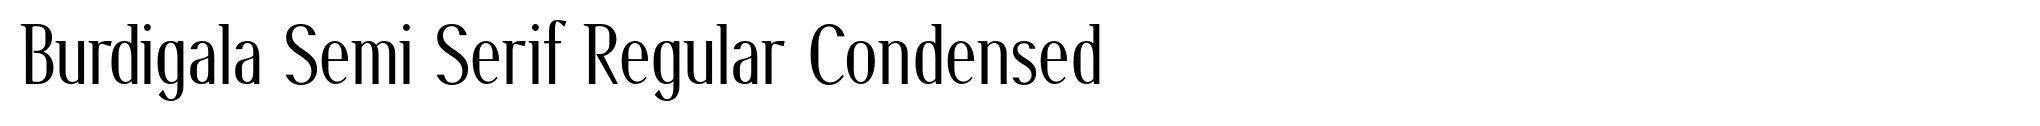 Burdigala Semi Serif Regular Condensed image